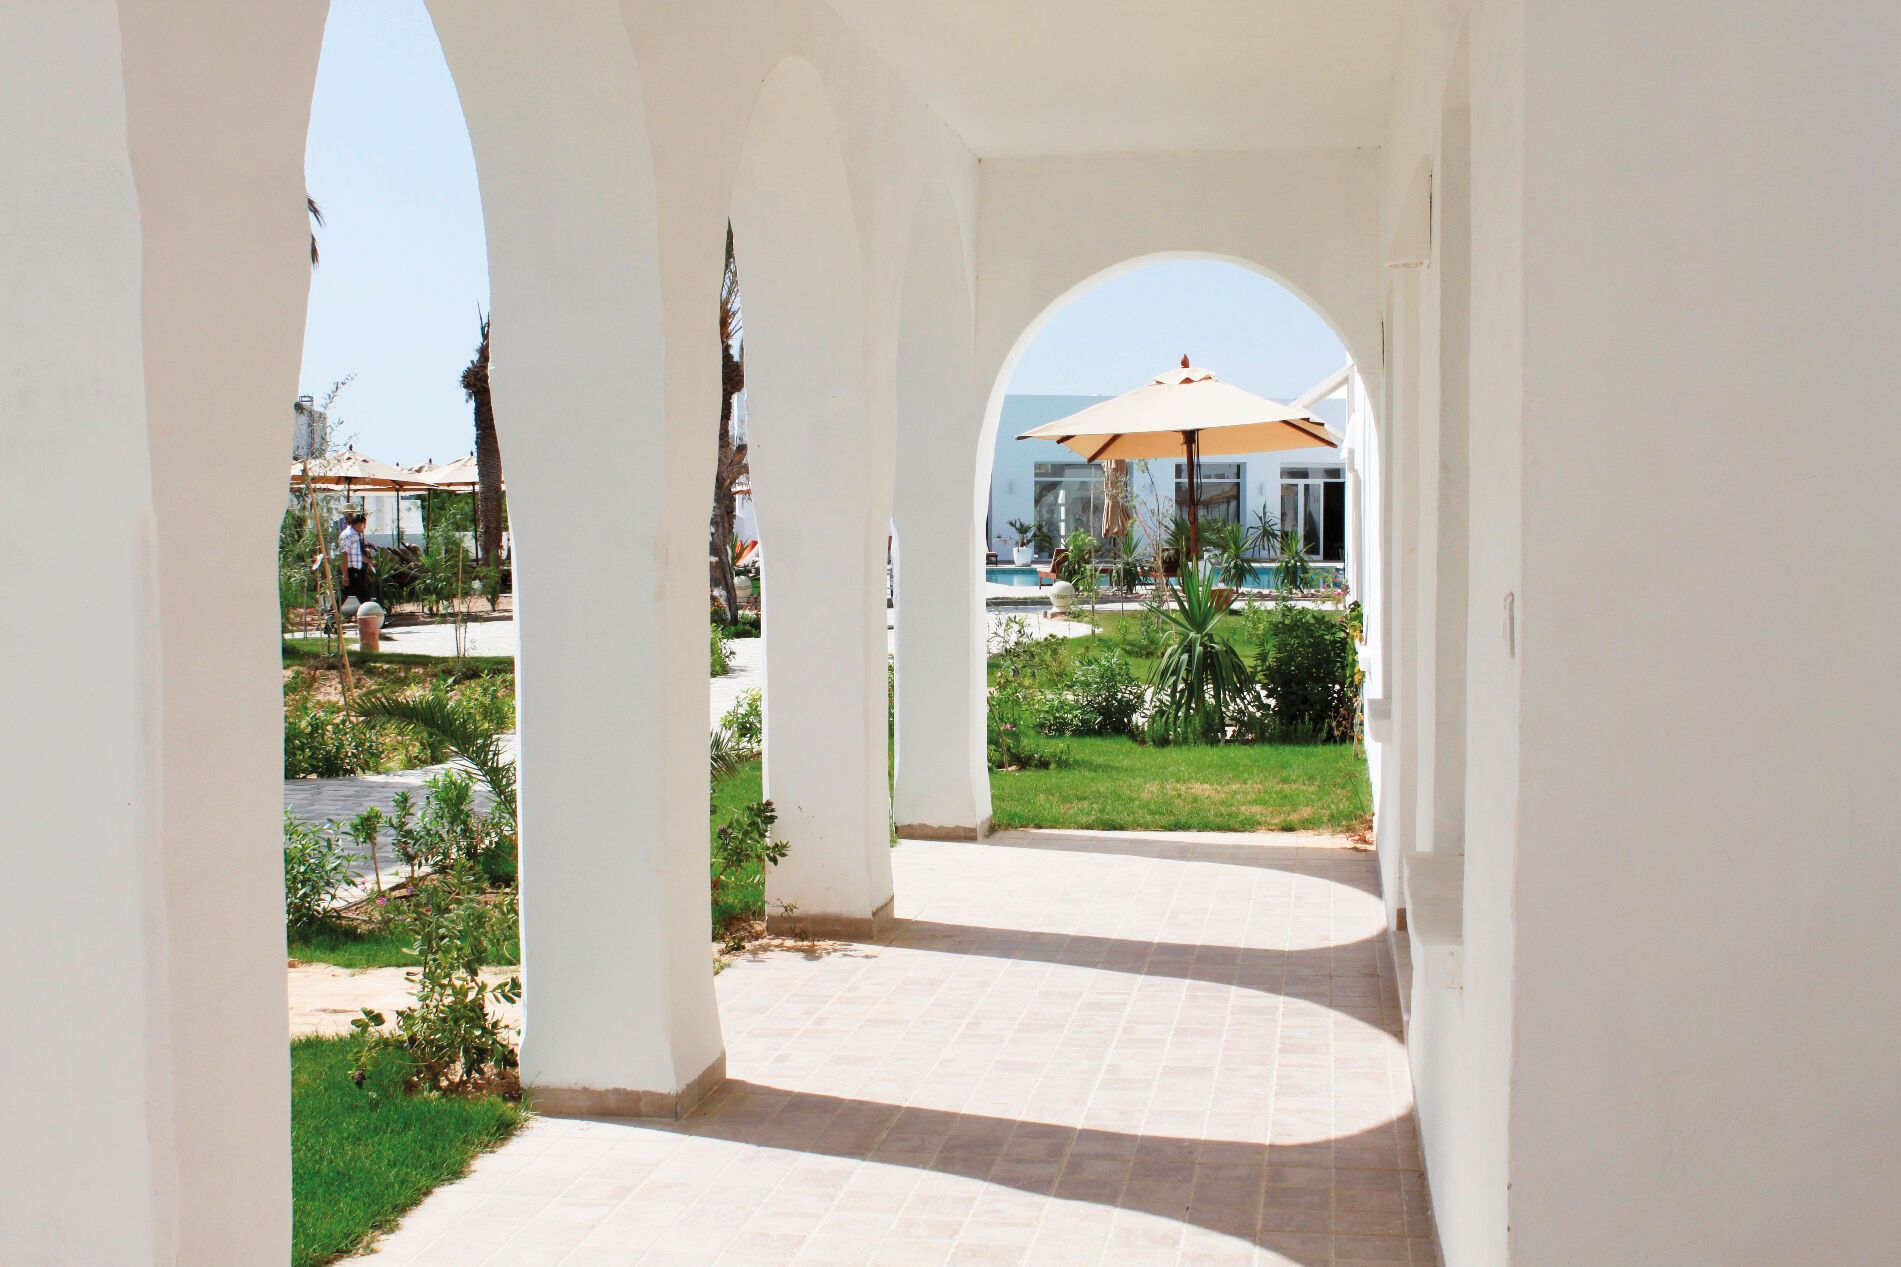 Tunisie - Djerba - Hotel Les Jardins de Toumana 4*